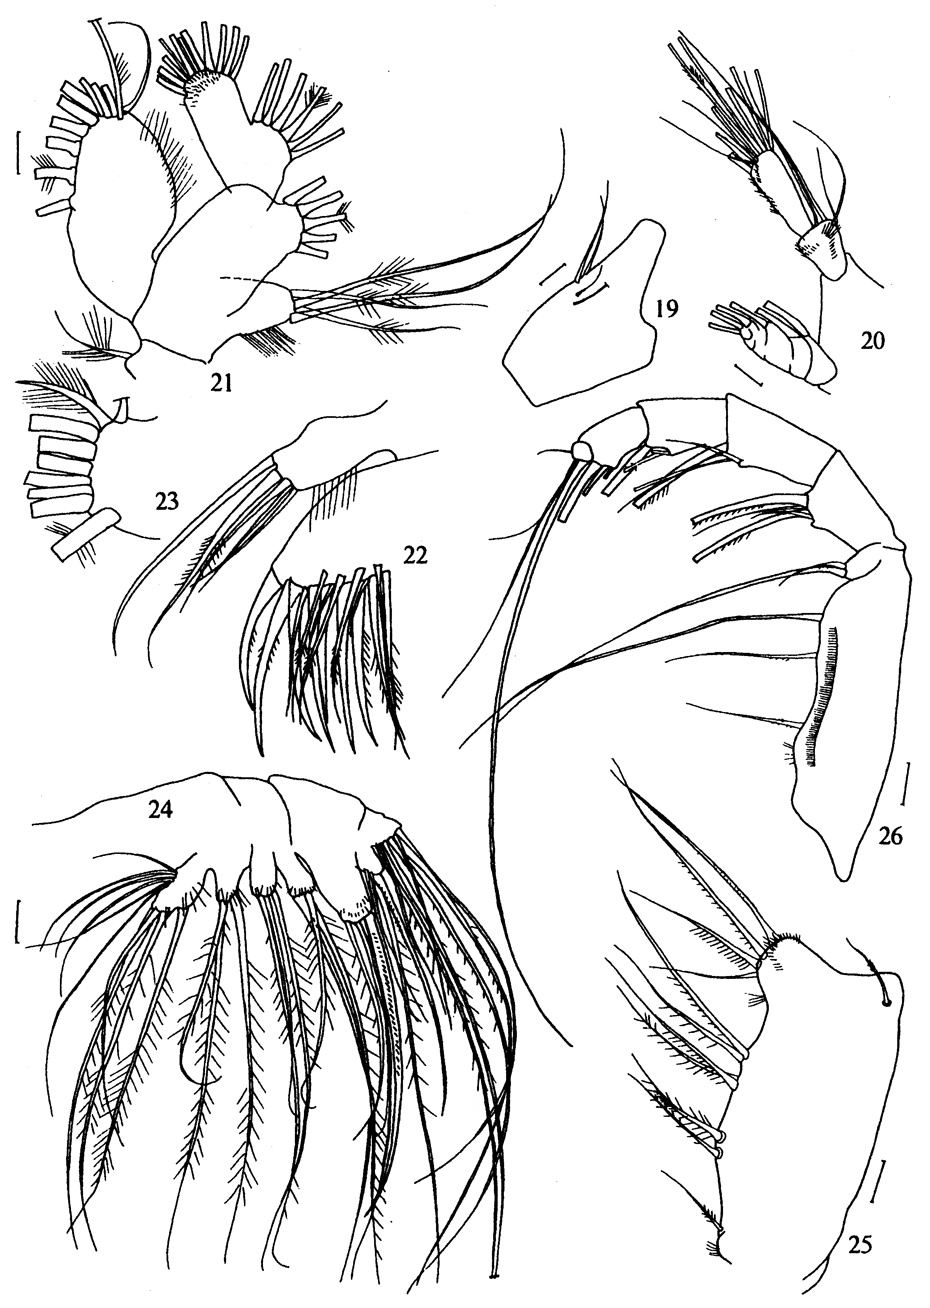 Species Metridia ferrarii - Plate 7 of morphological figures